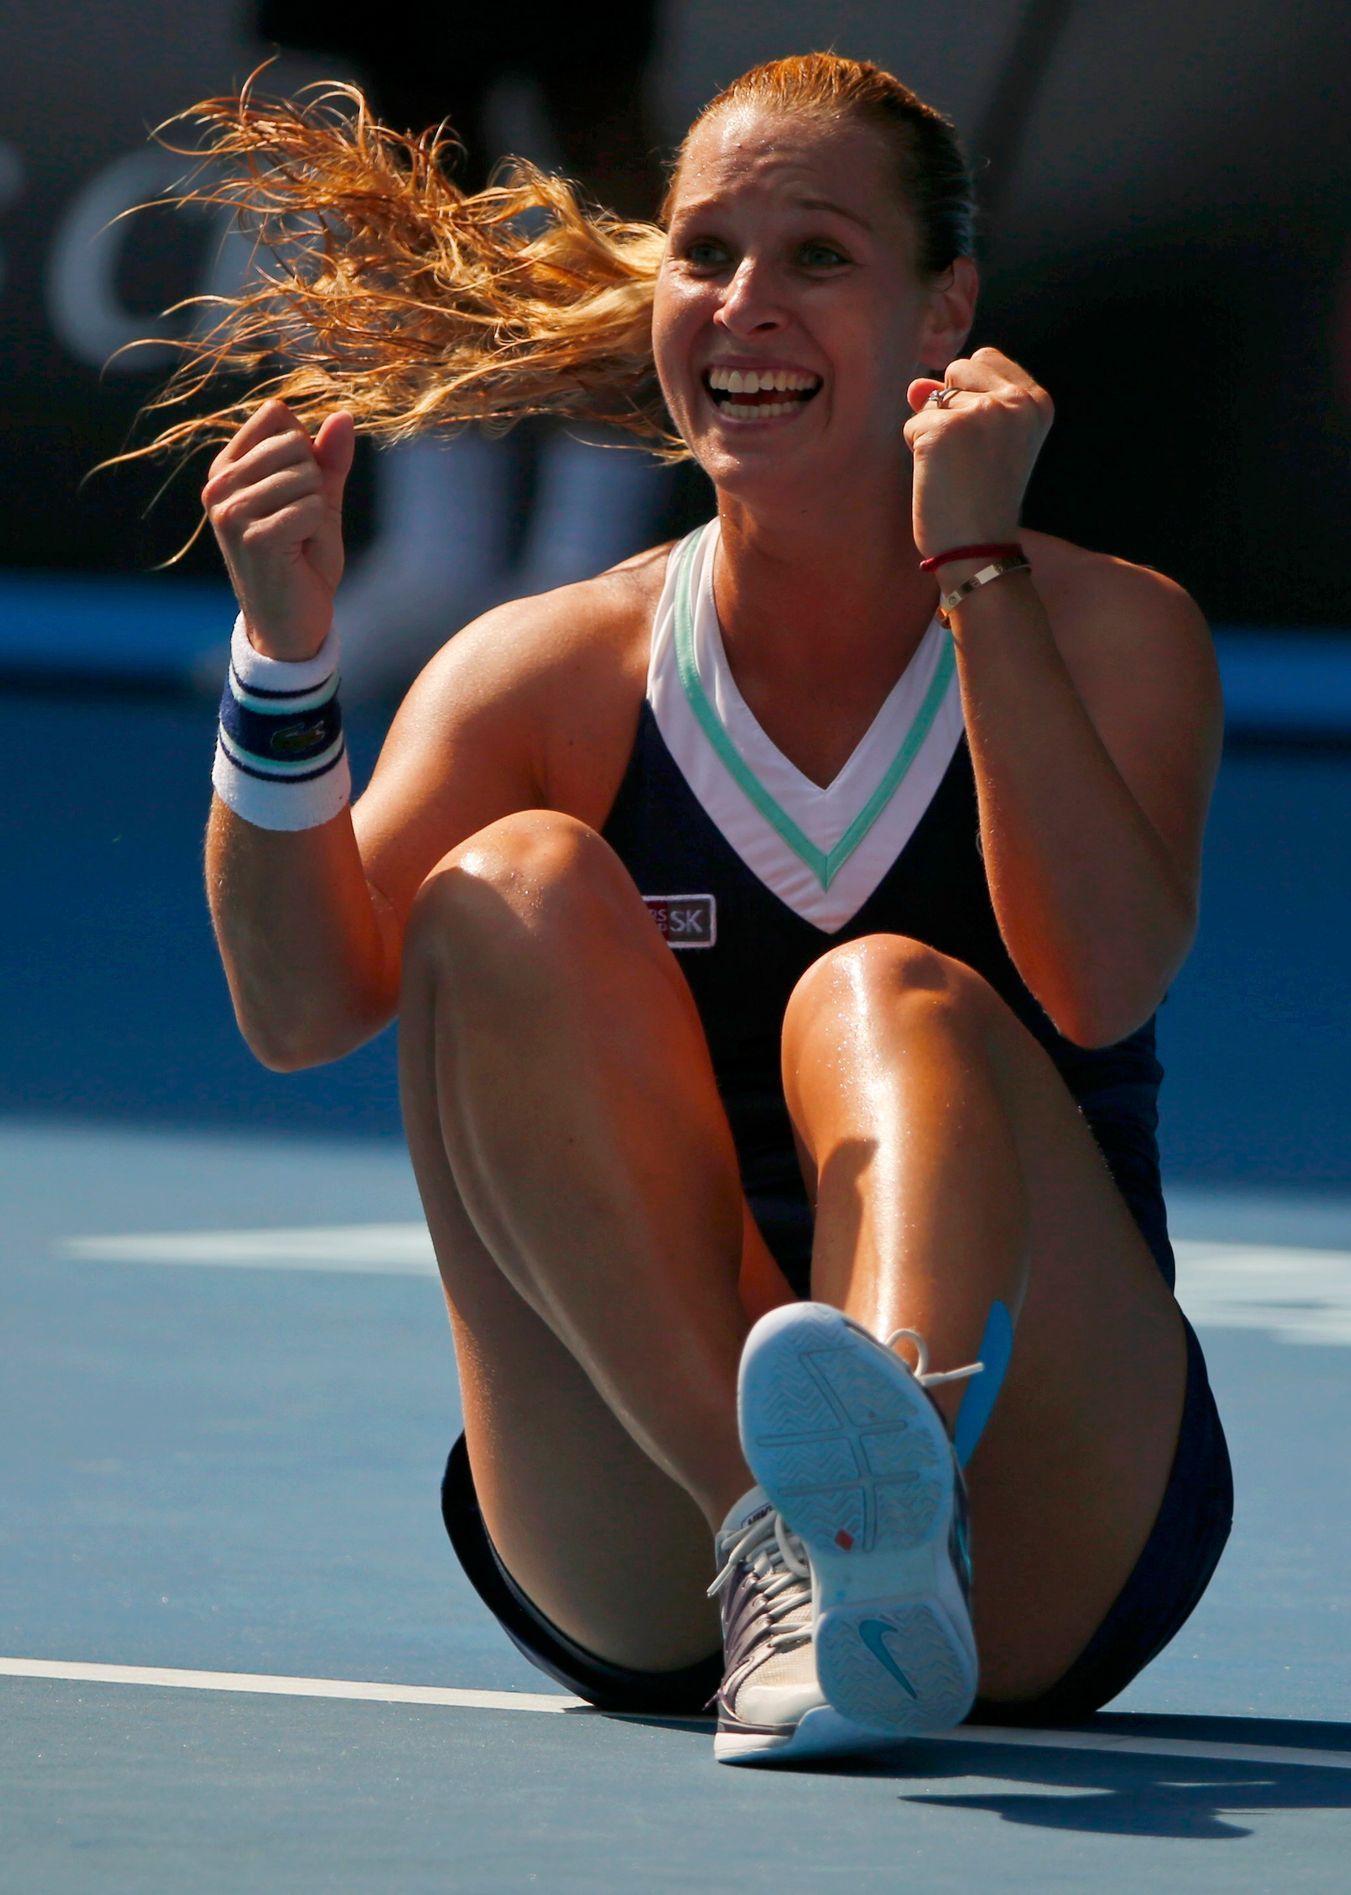 Dominika Cibulkova of Slovakia celebrates defeating Agnieszka Radwanska of Poland in their women's singles semi-final match at the Australian Open 2014 tennis tournament in Melbourne